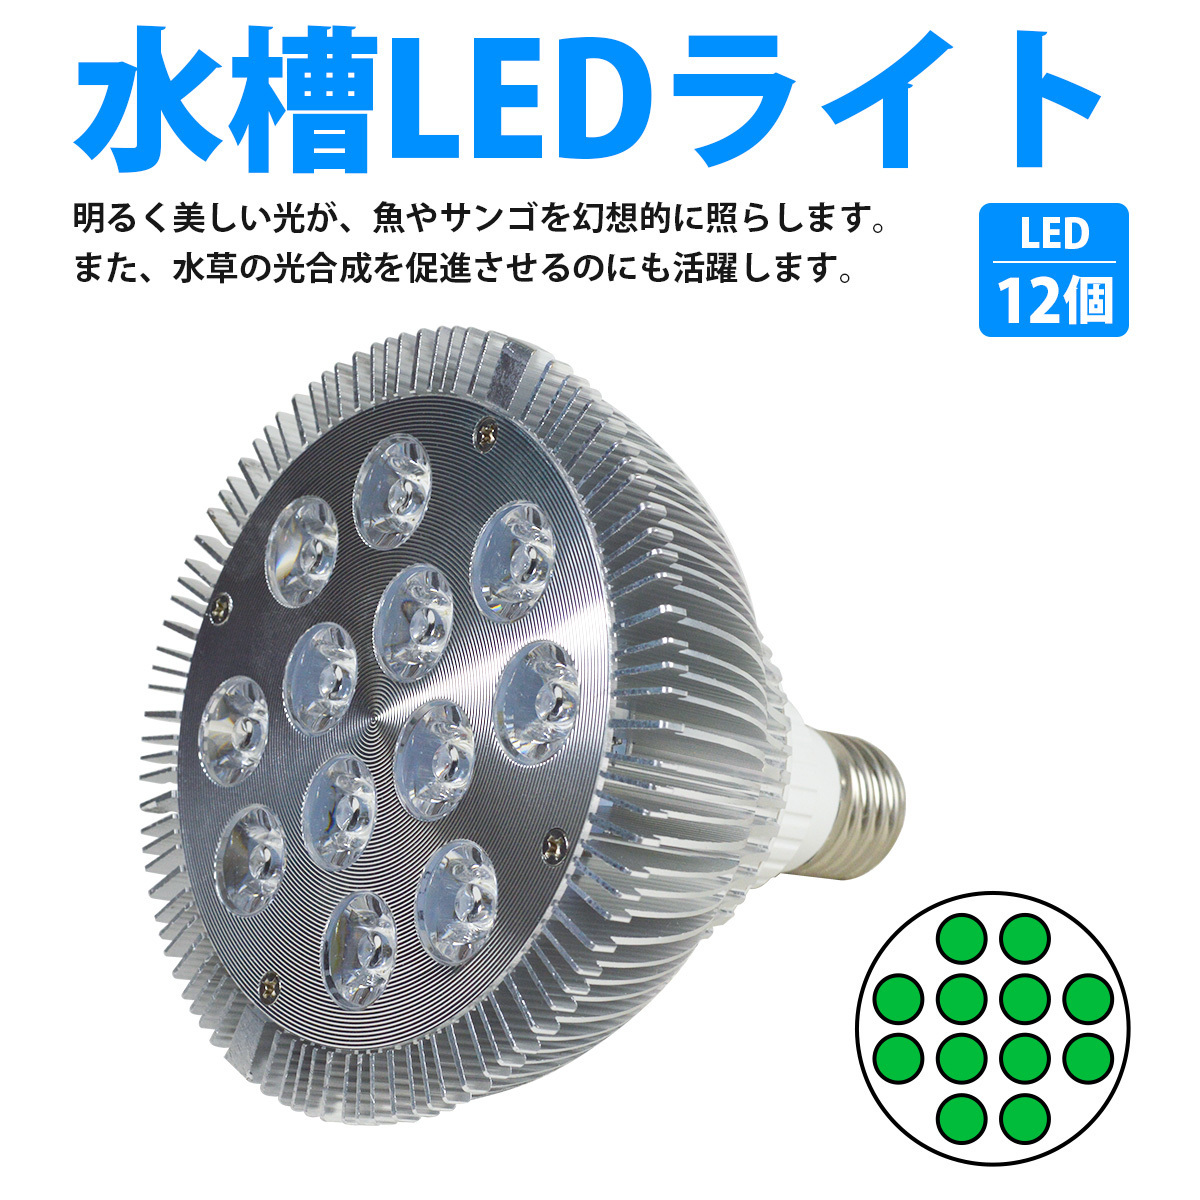 LED 電球 スポットライト 24W(2W×12)シアン12灯 水槽 照明 E26 LEDスポットライト 電気 水草 サンゴ 熱帯魚 観賞魚 植物育成_laqua-b-010-sv-01-a